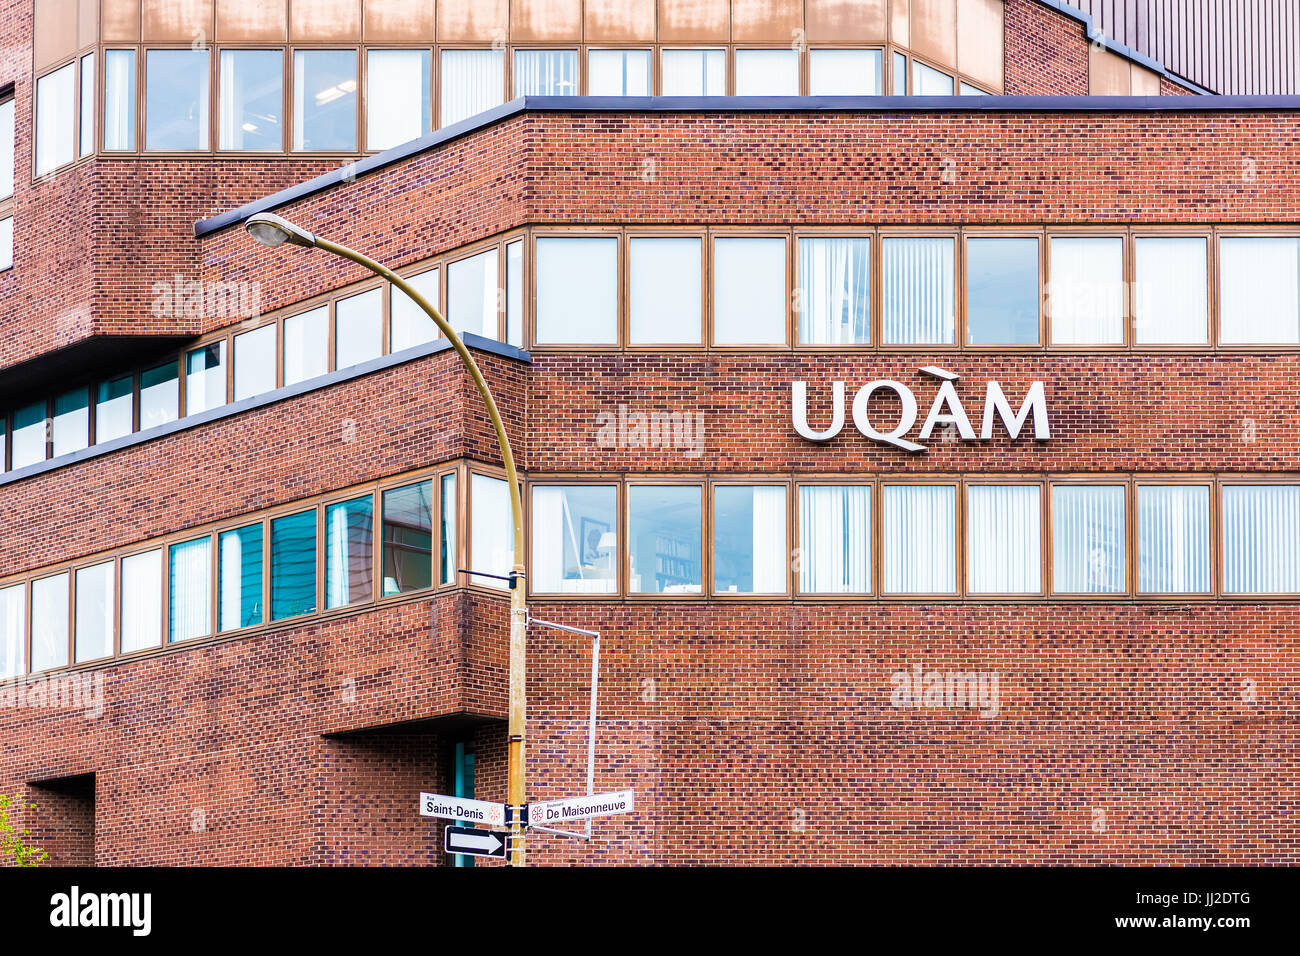 Montreal, Canada - May 26, 2017: UQAM University sign closeup brick building with rue Saint Denis and Boulevard de Maisonneuve Stock Photo